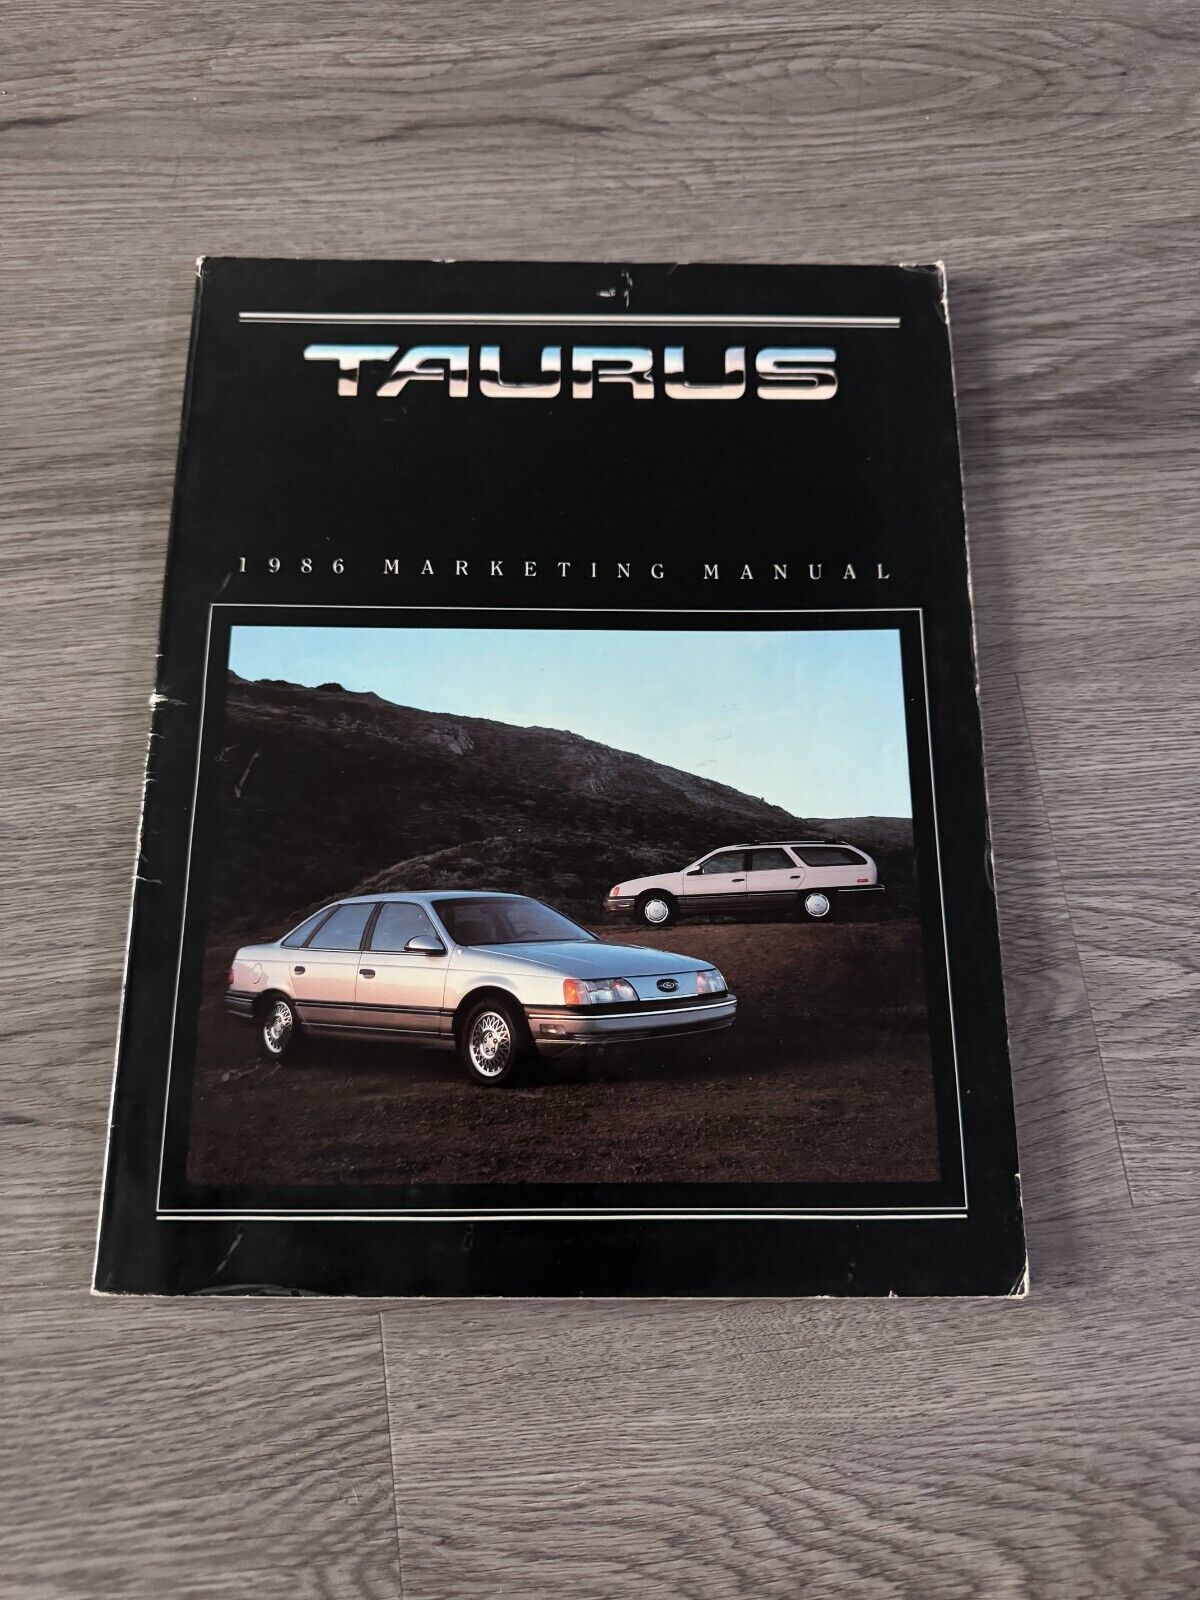 1986 Ford Taurus Marketing Manual